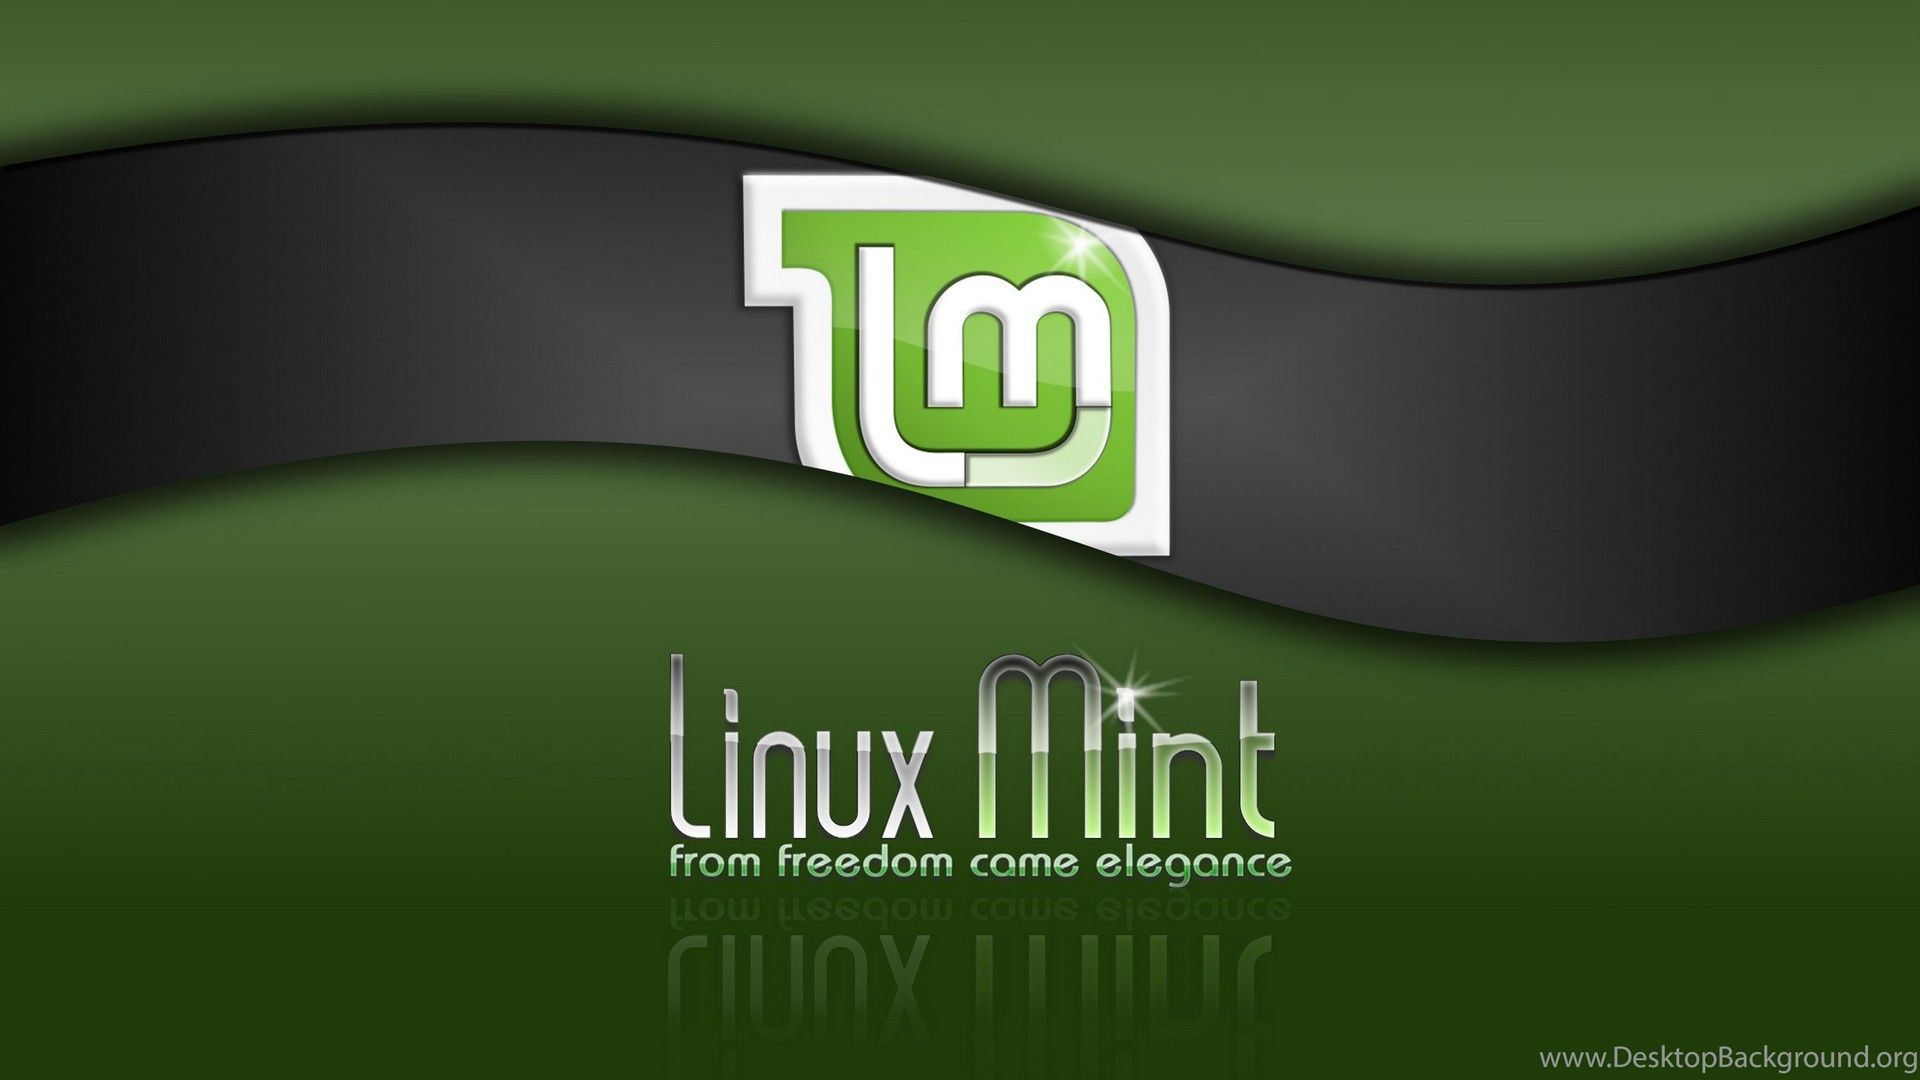 Best Green Neon Wallpaper. Best Wallpaper HD. Linux mint, Mint wallpaper, Linux